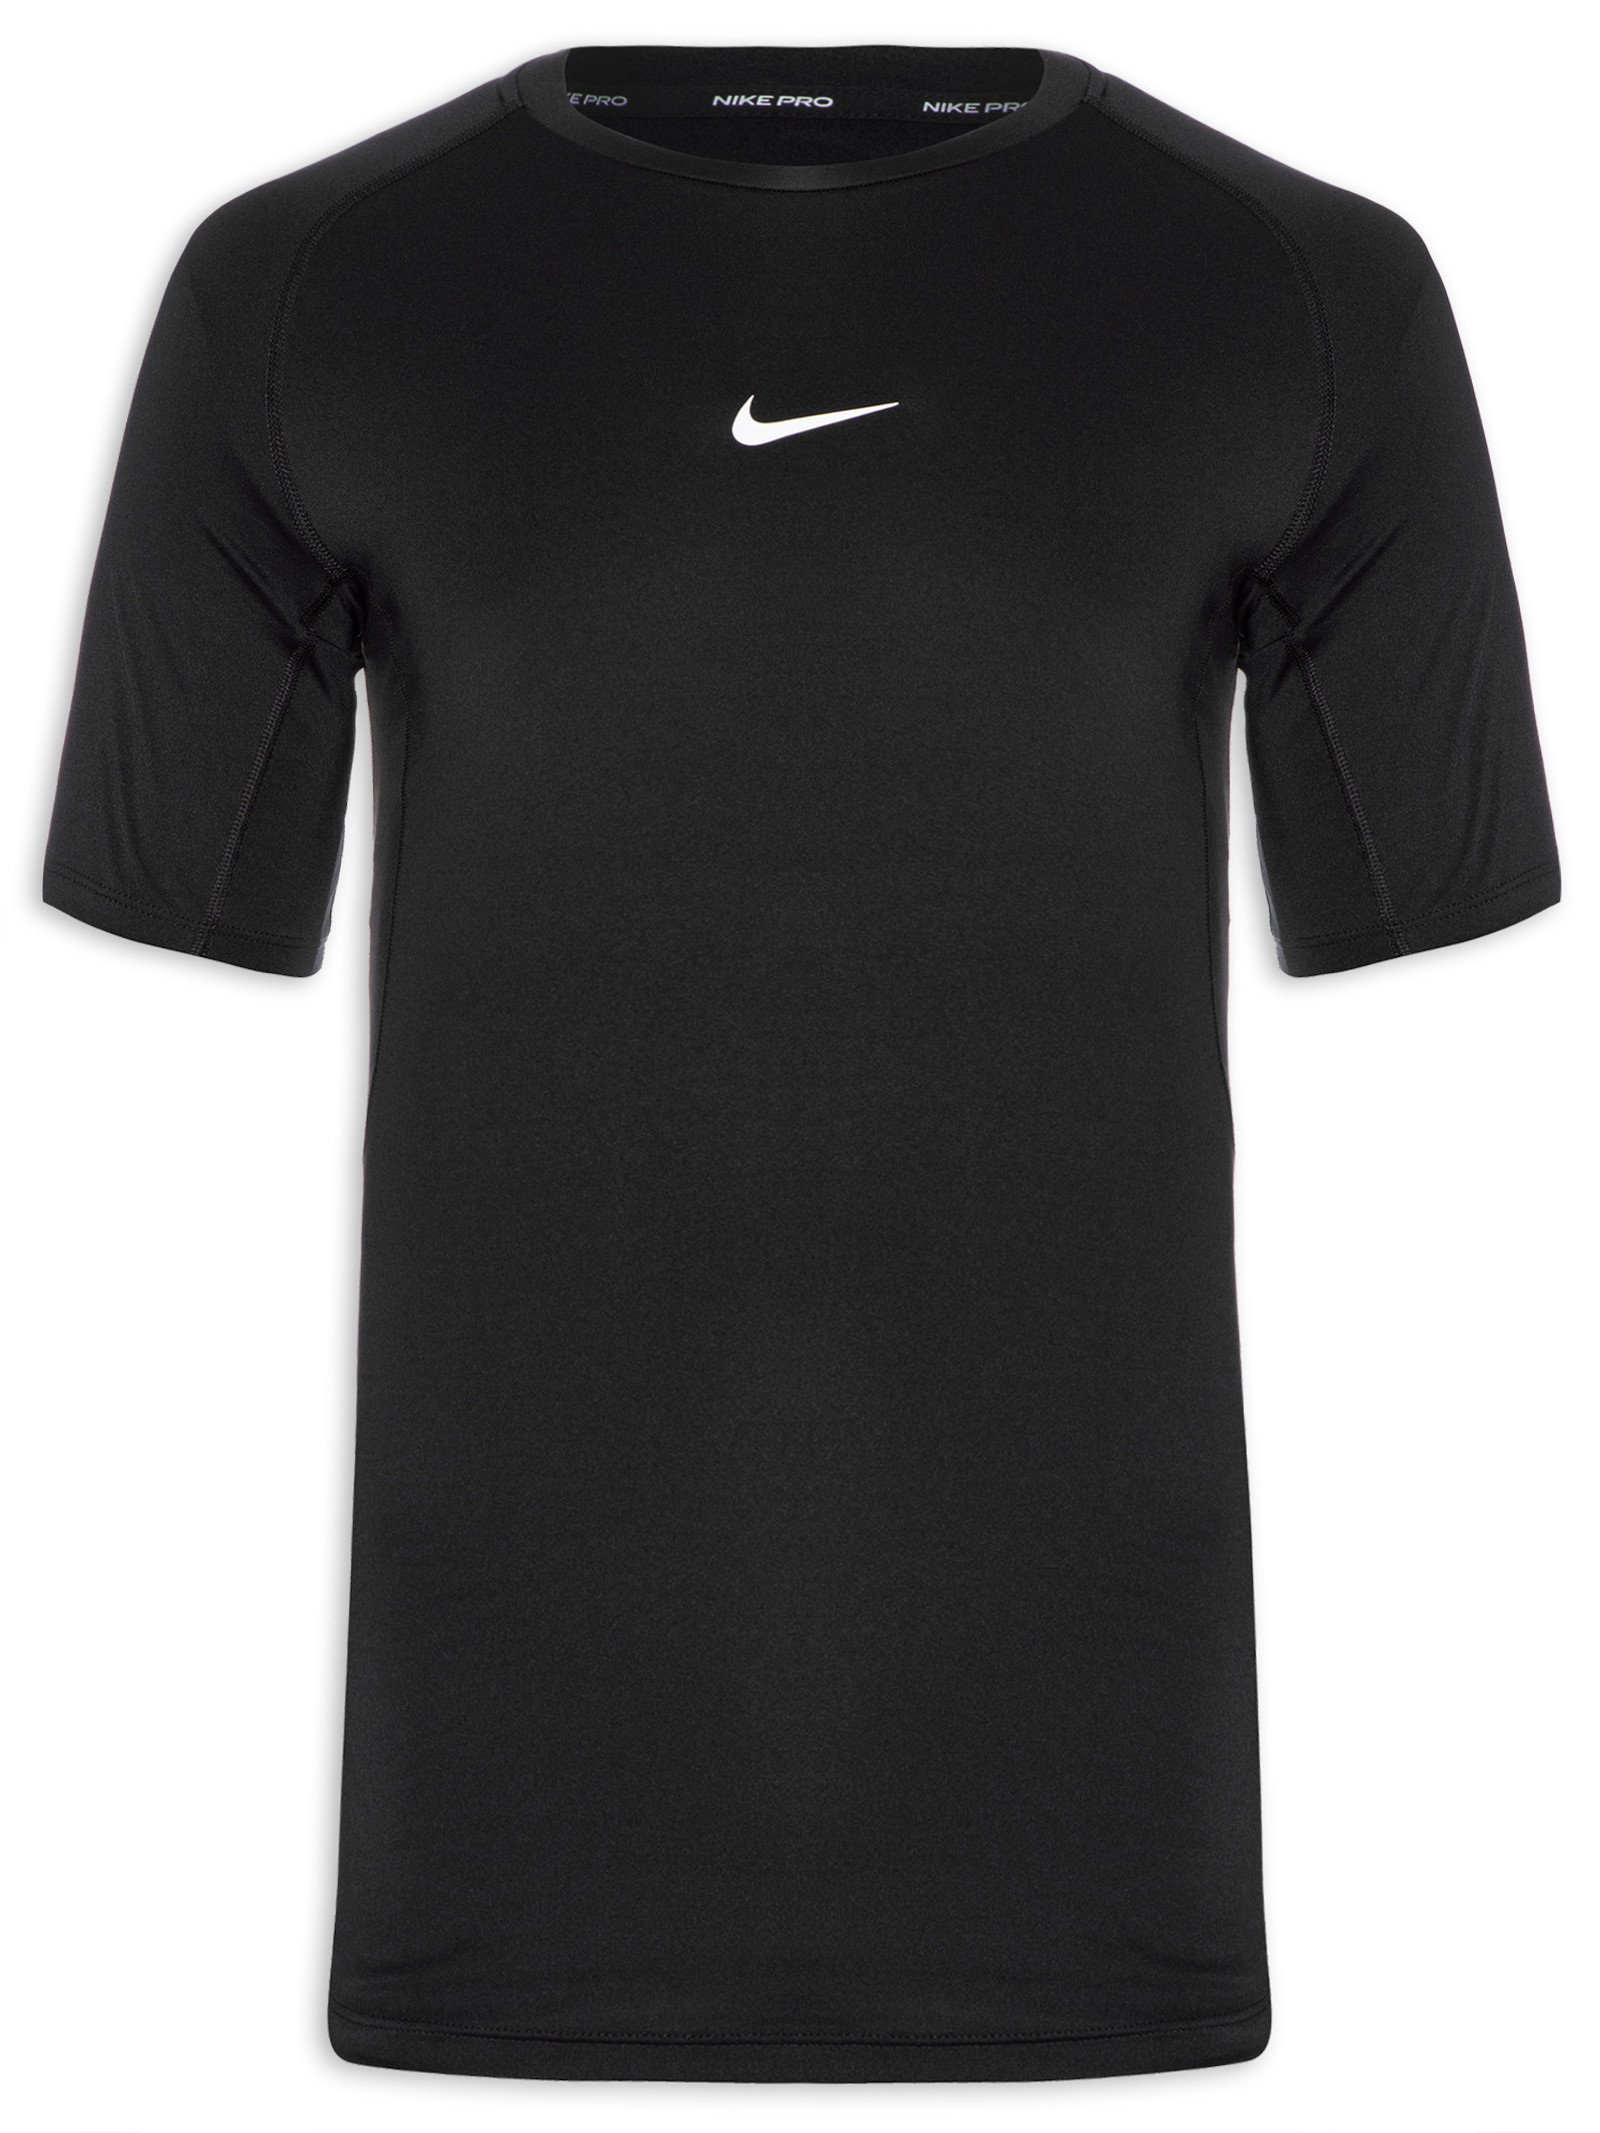 Camiseta Nike Pro Dri-Fit - Masculina em Promoção